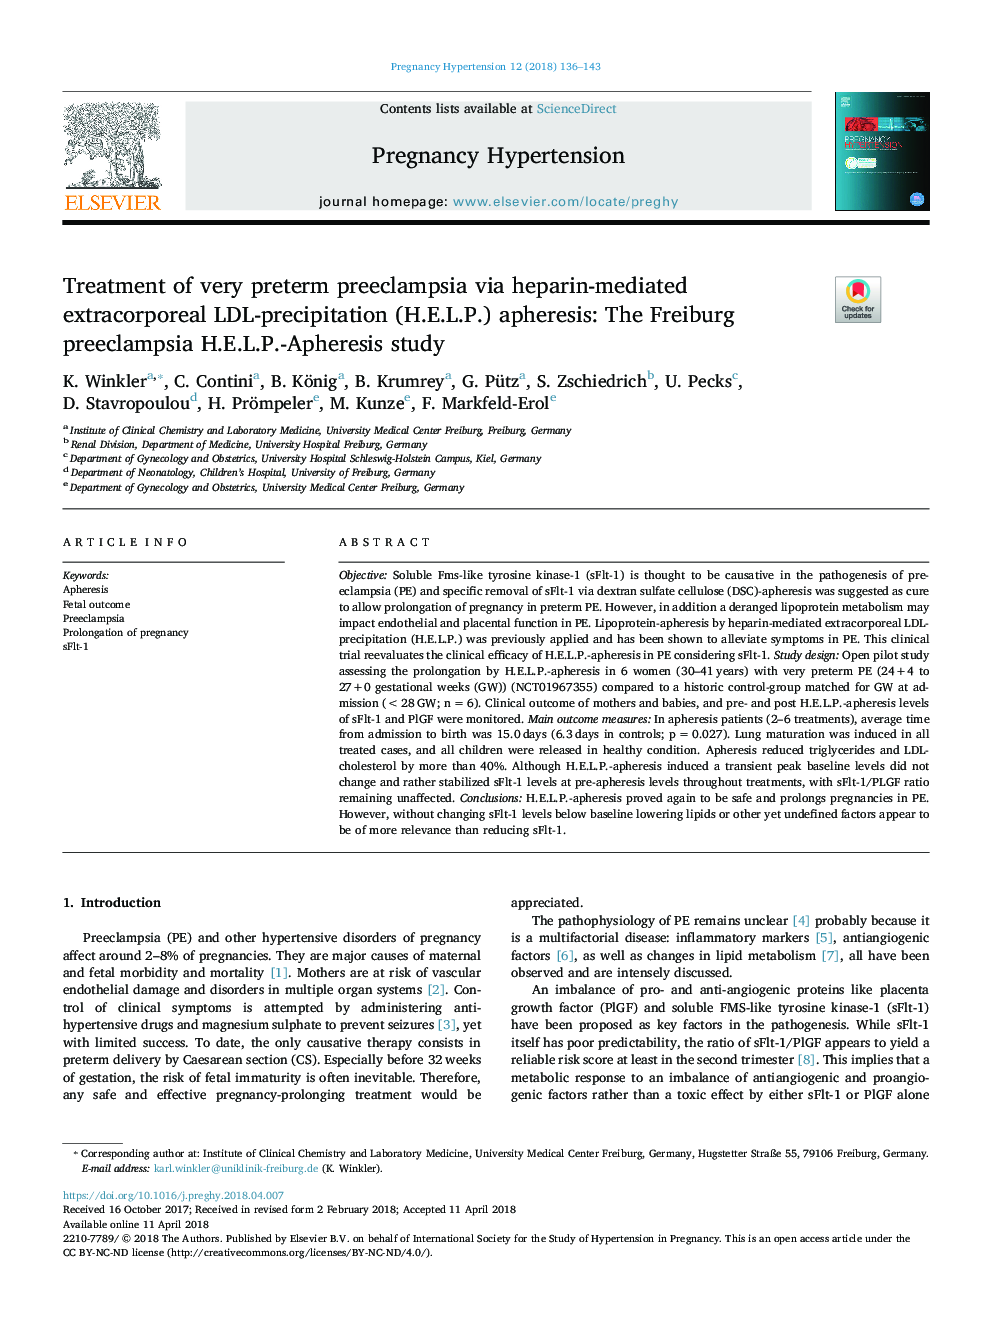 Treatment of very preterm preeclampsia via heparin-mediated extracorporeal LDL-precipitation (H.E.L.P.) apheresis: The Freiburg preeclampsia H.E.L.P.-Apheresis study